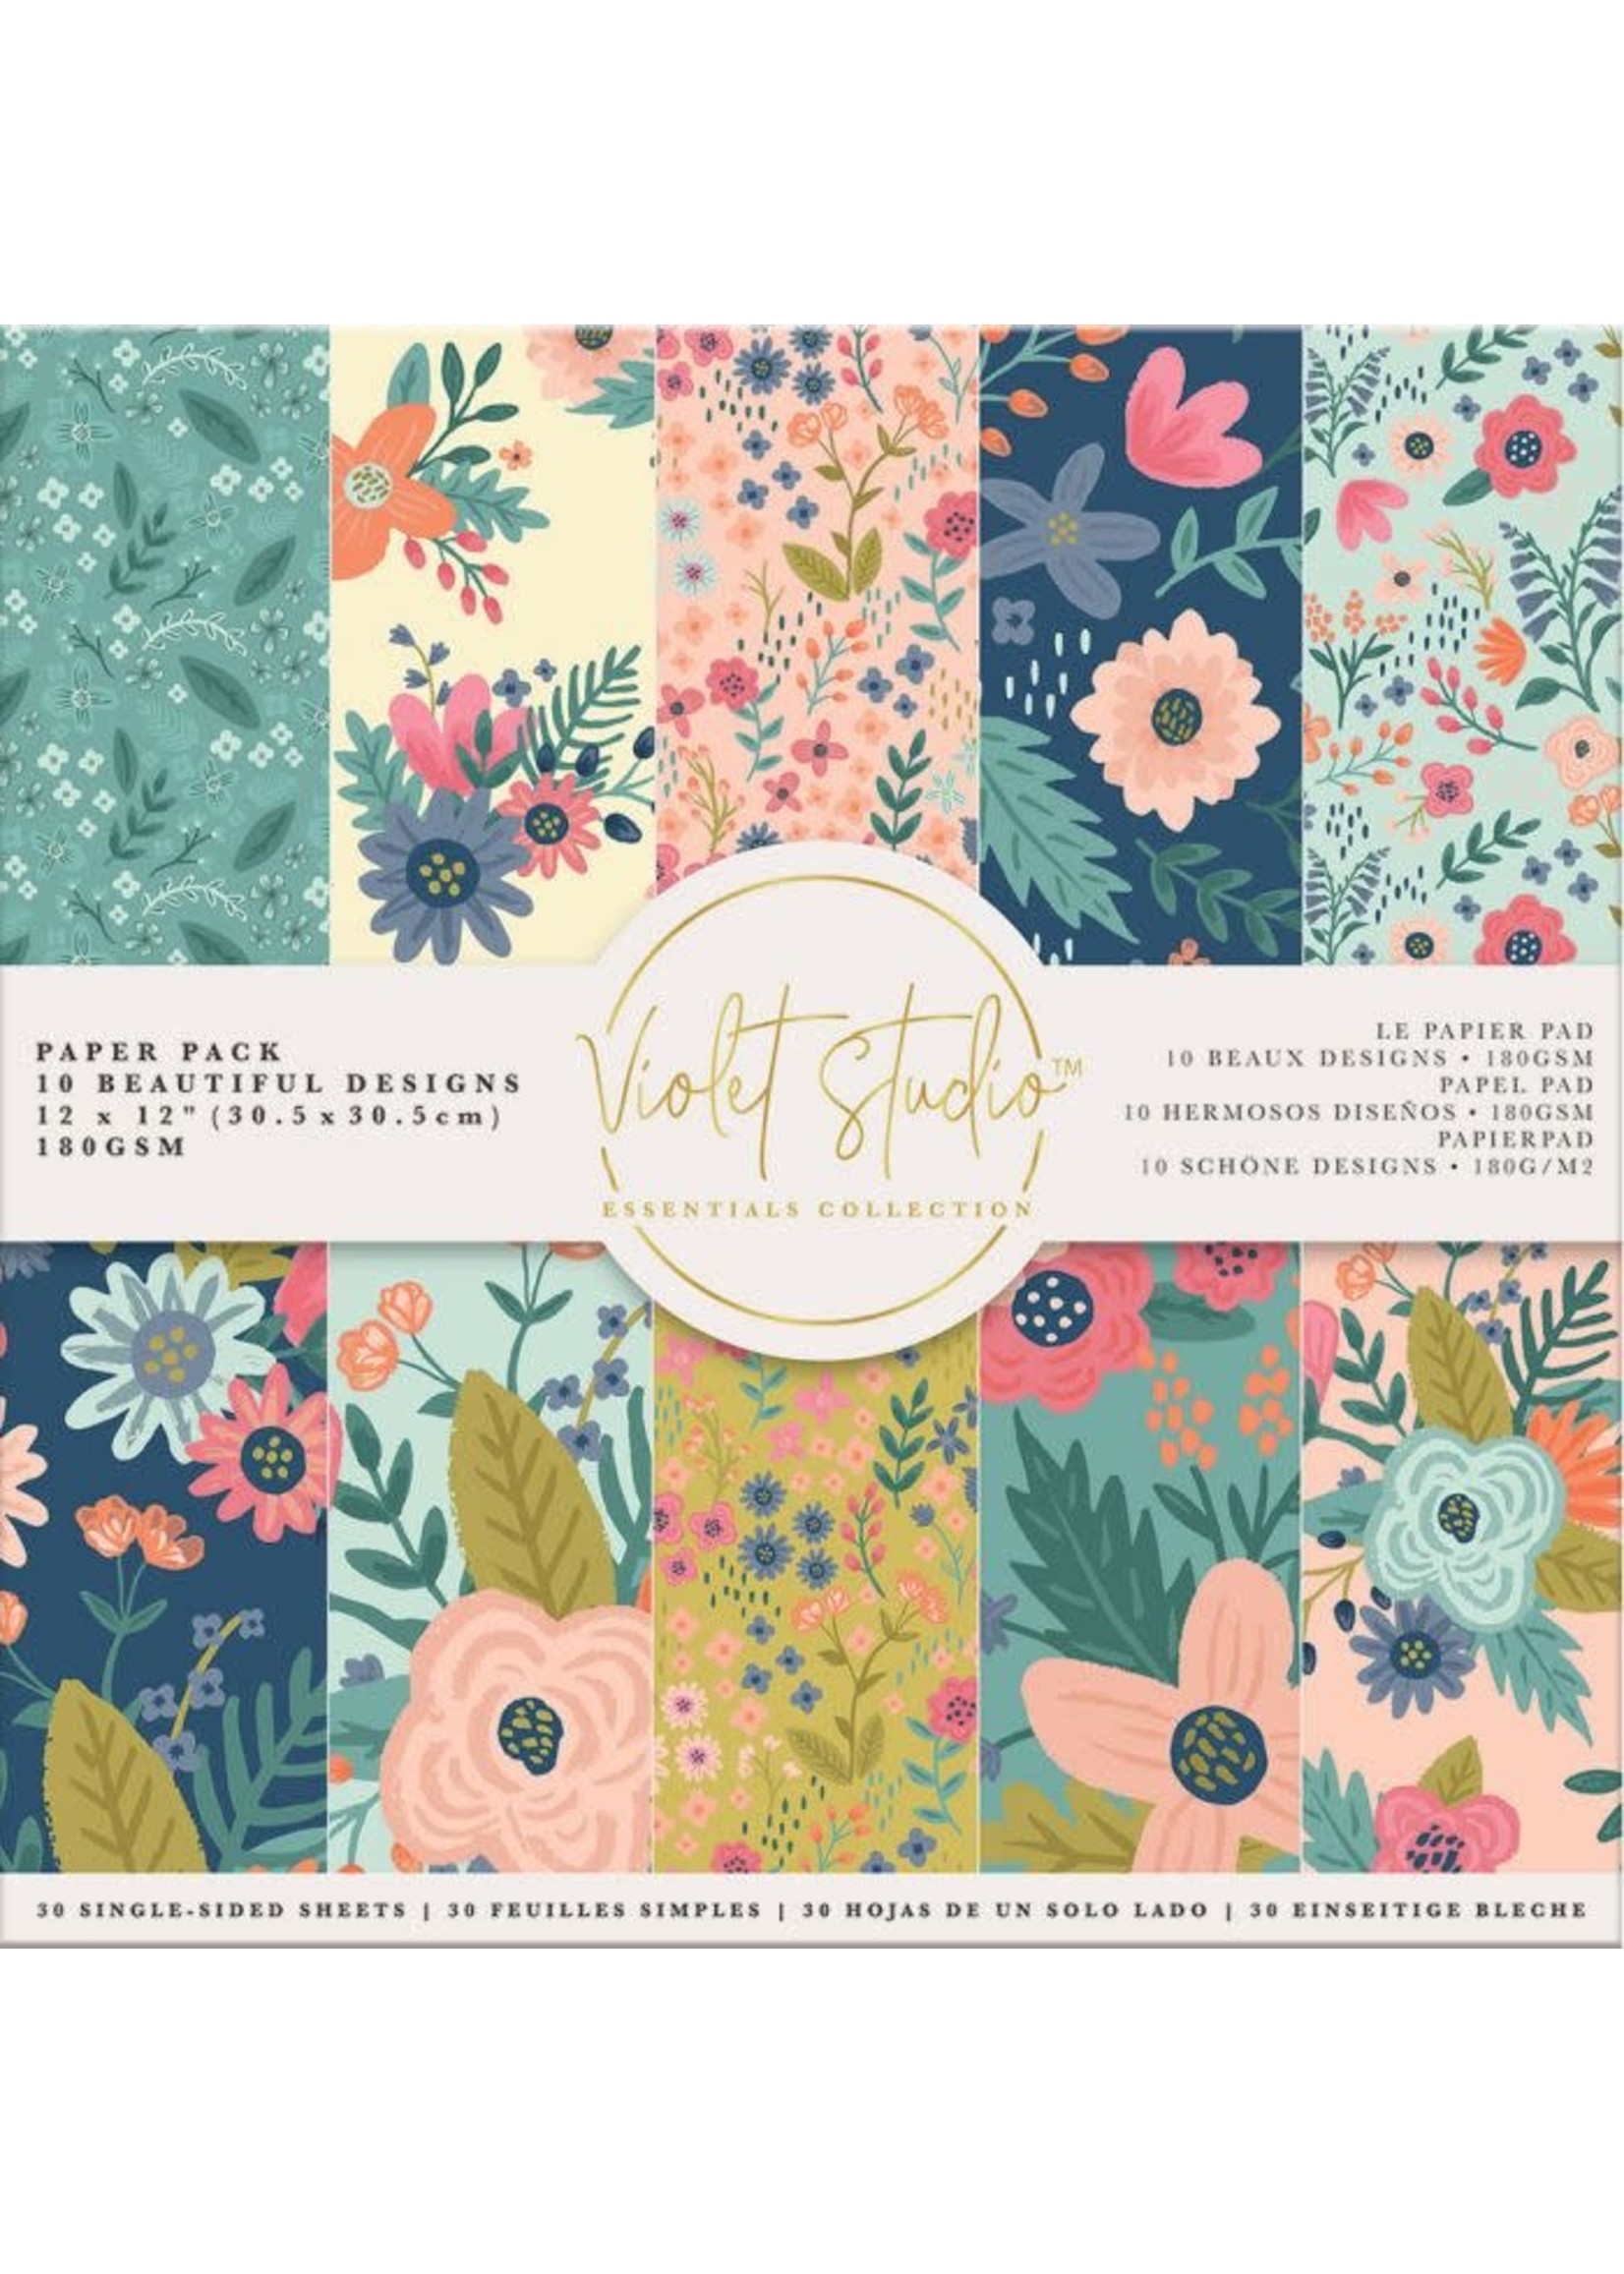 crafters companion Violet Studios: Florals